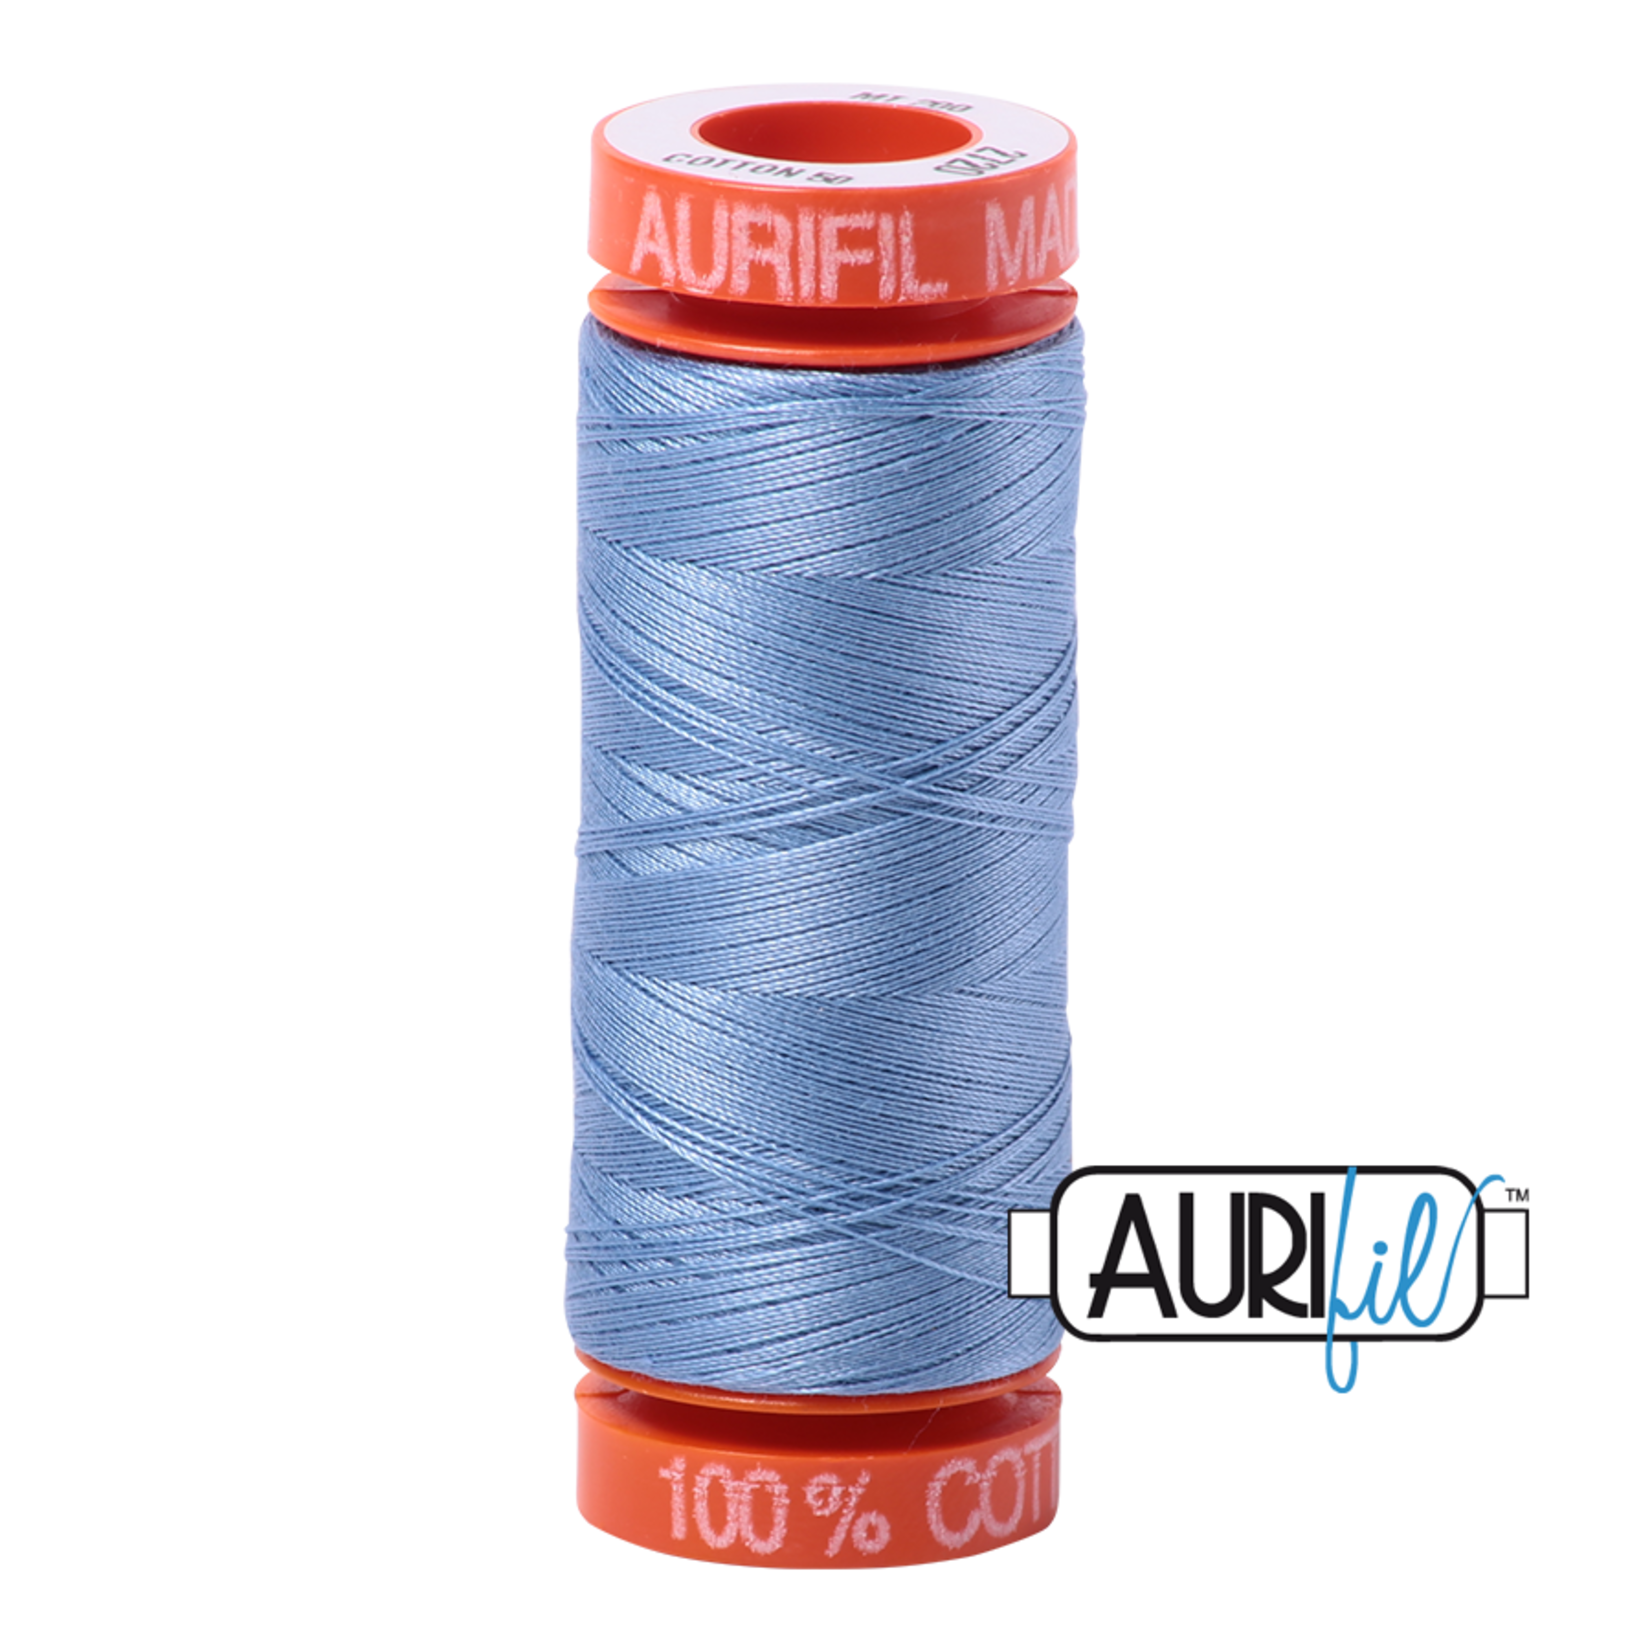 AURIFIL AURIFIL 50 WT Light Delft Blue 2720 Small Spool